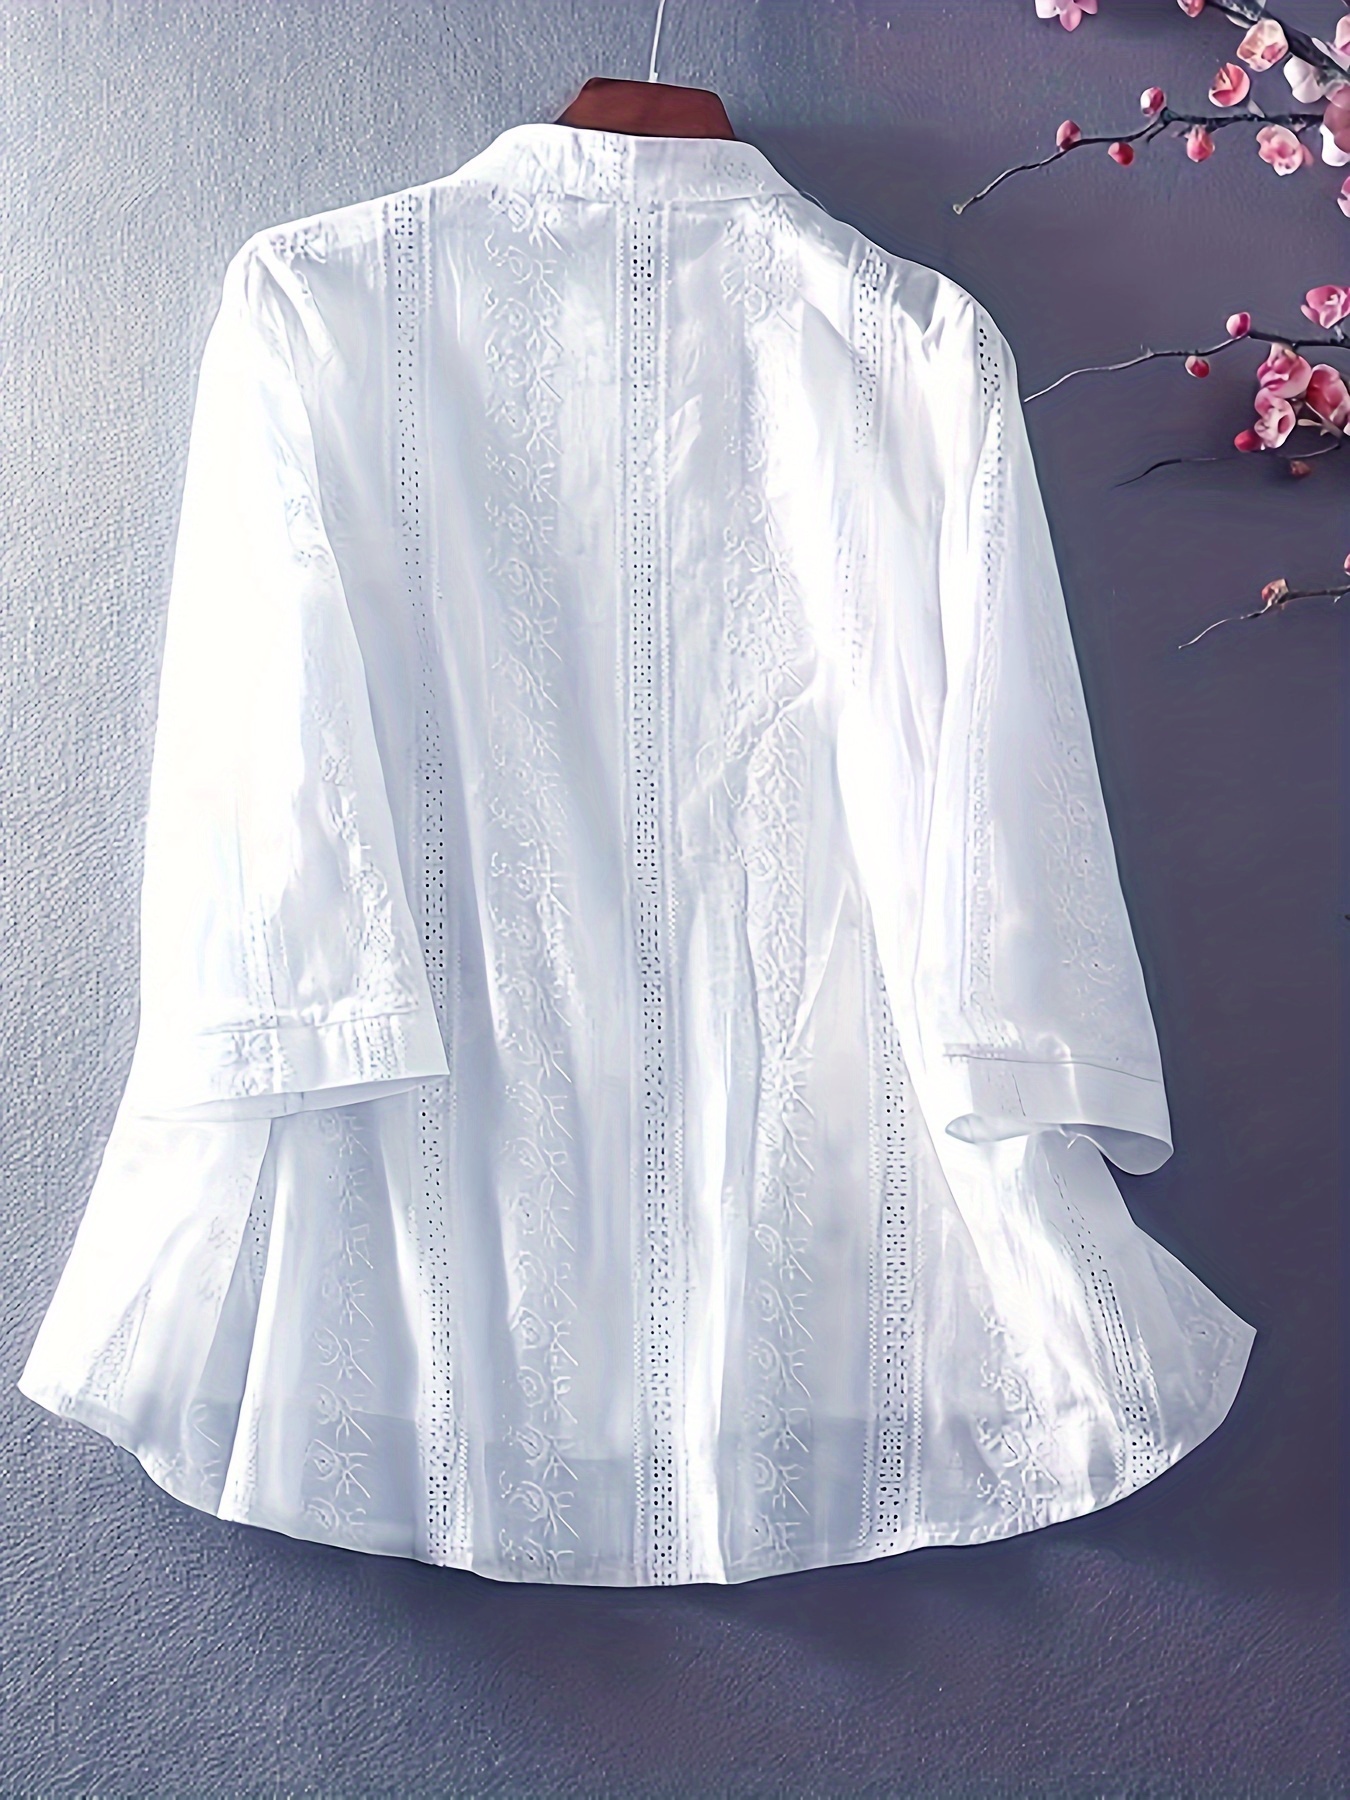 eyelet floral blouse elegant button front blouse for spring summer womens clothing details 5